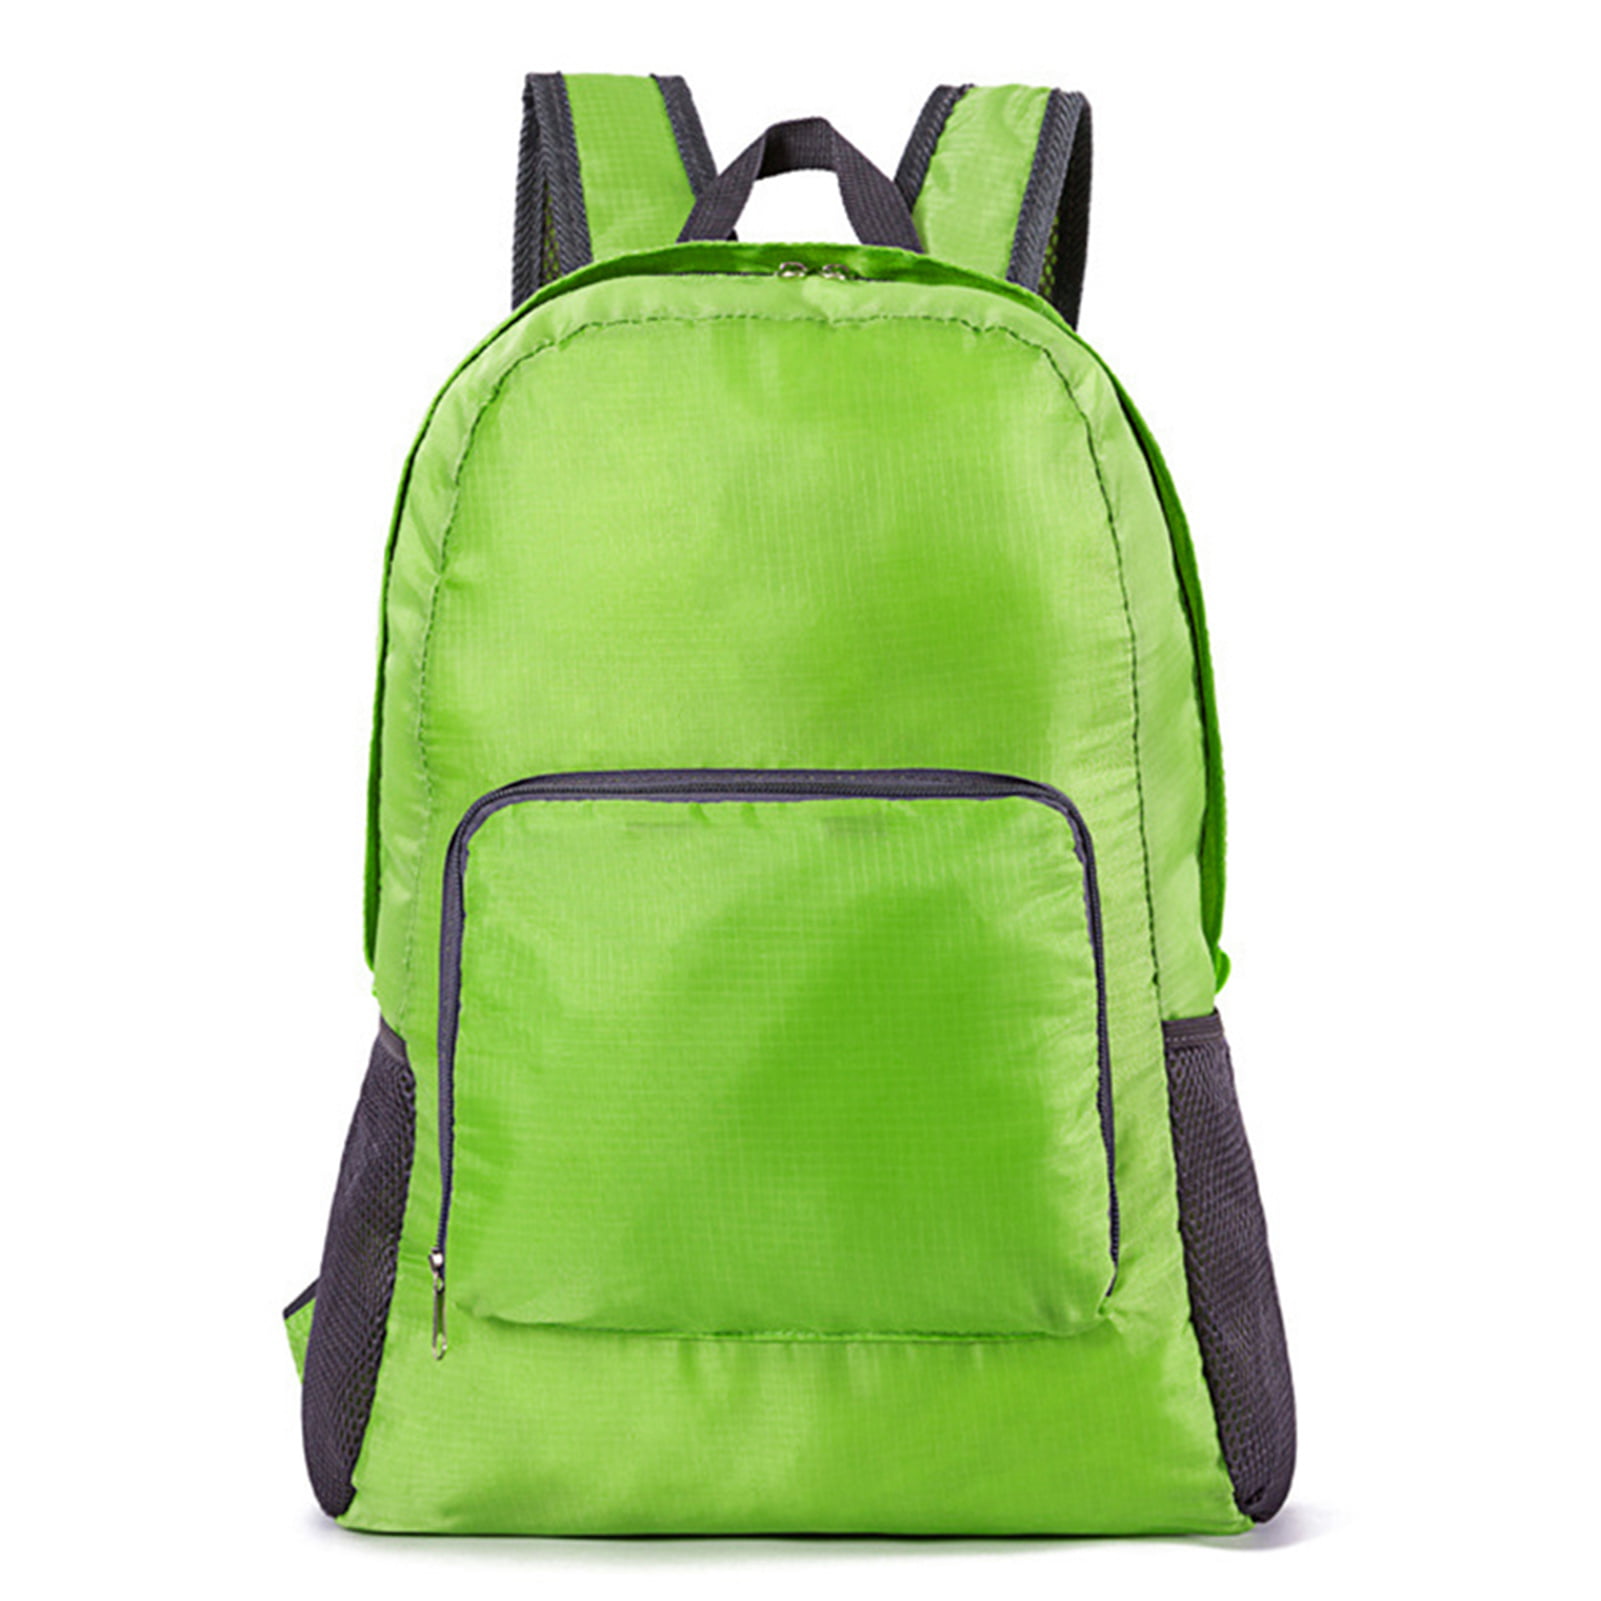 Outdoor Sports Travel Waterproof Foldable Backpack Hiking Bag Camping Rucksack 